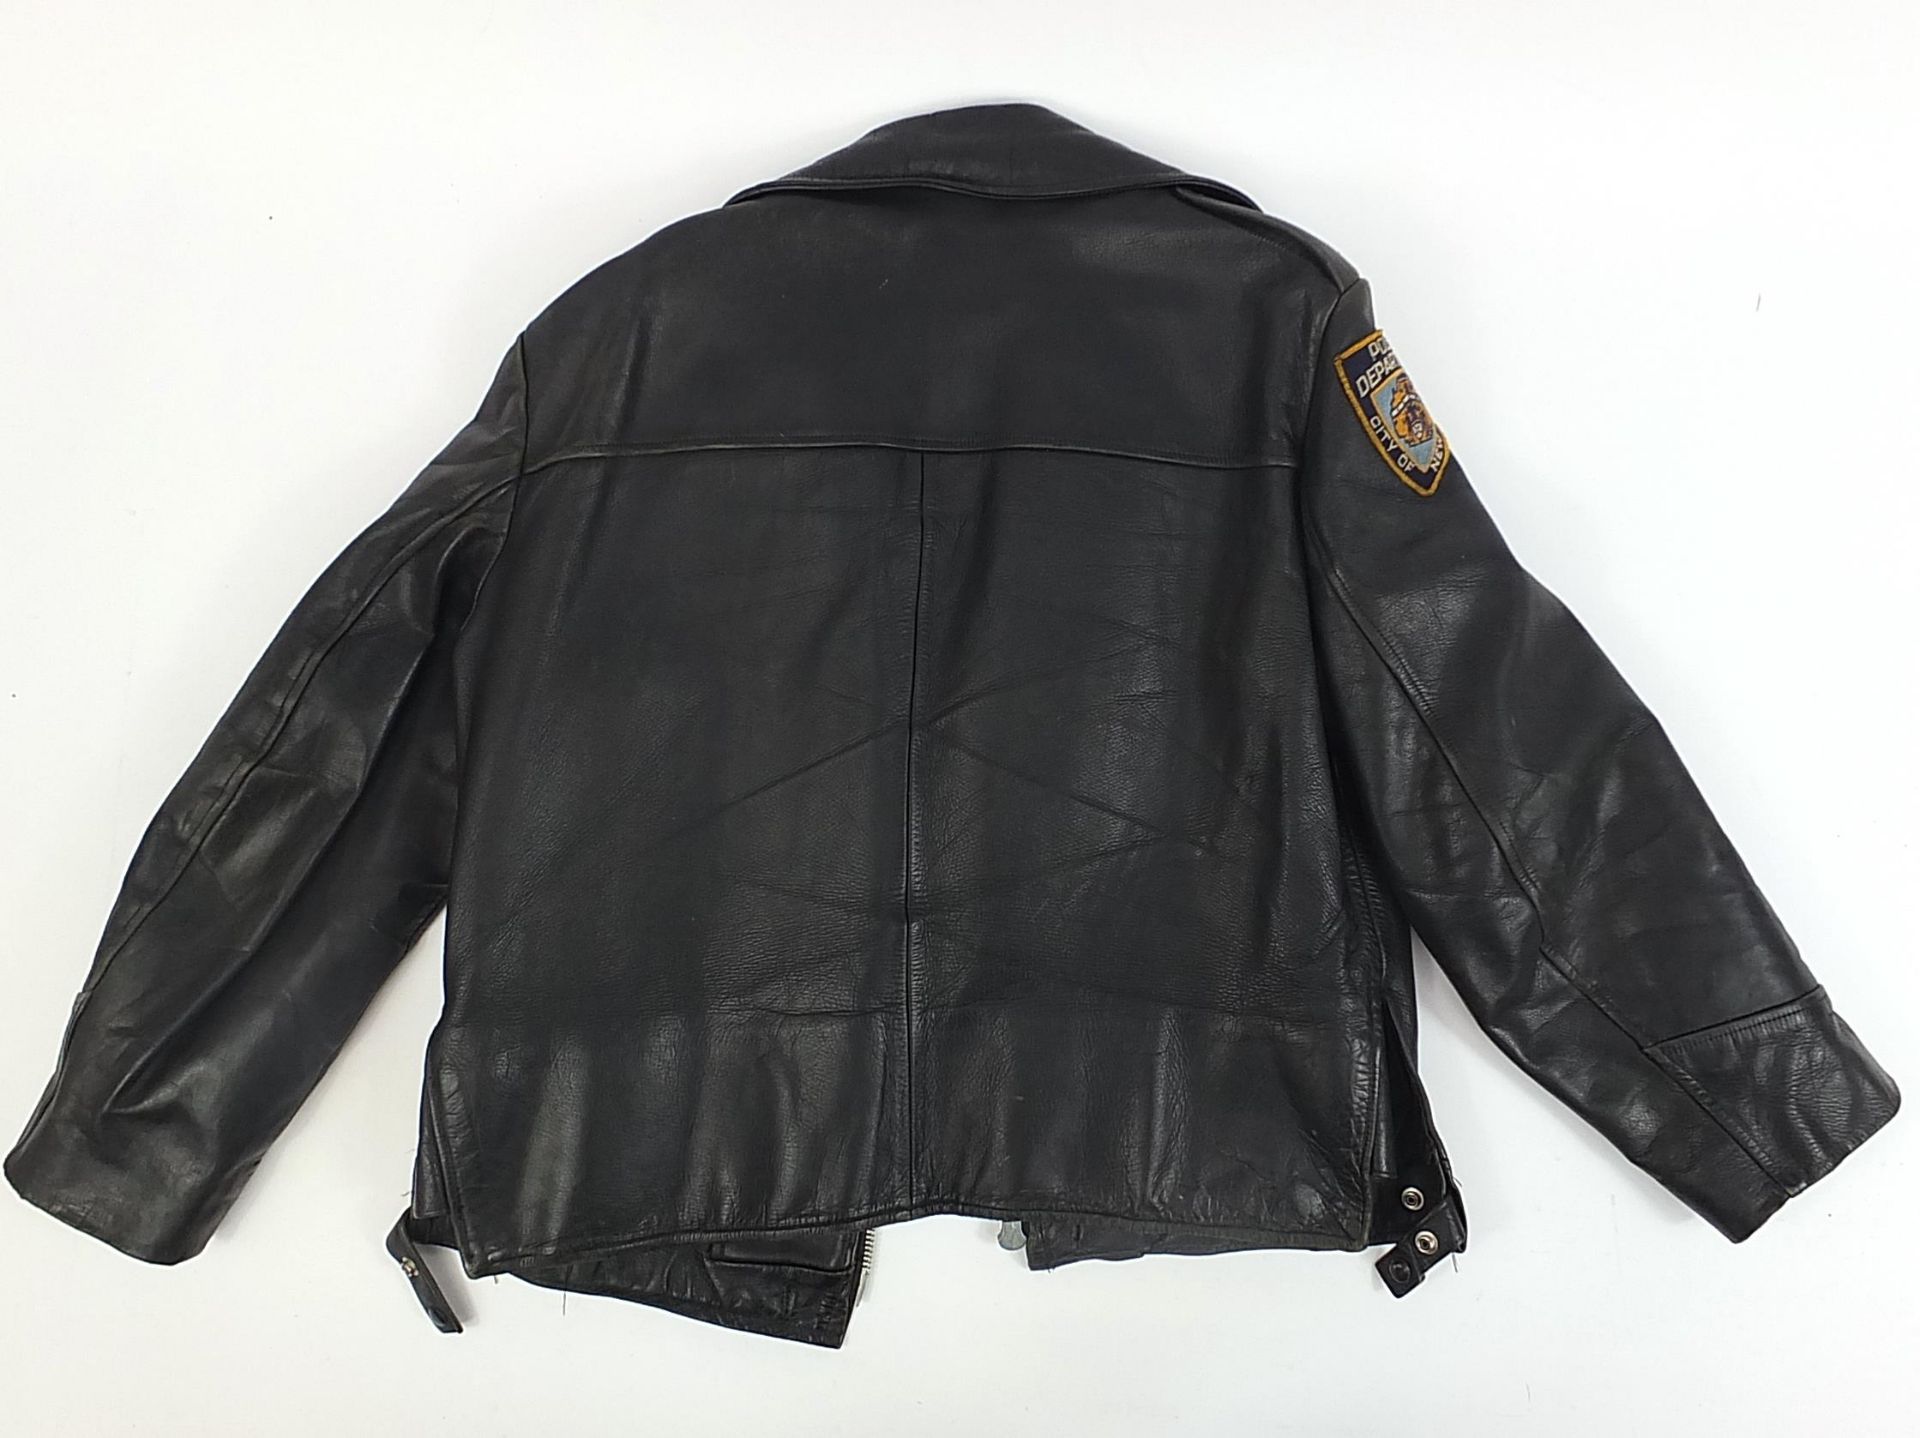 Vintage NYPD Eisenhower leather jacket - Image 2 of 3